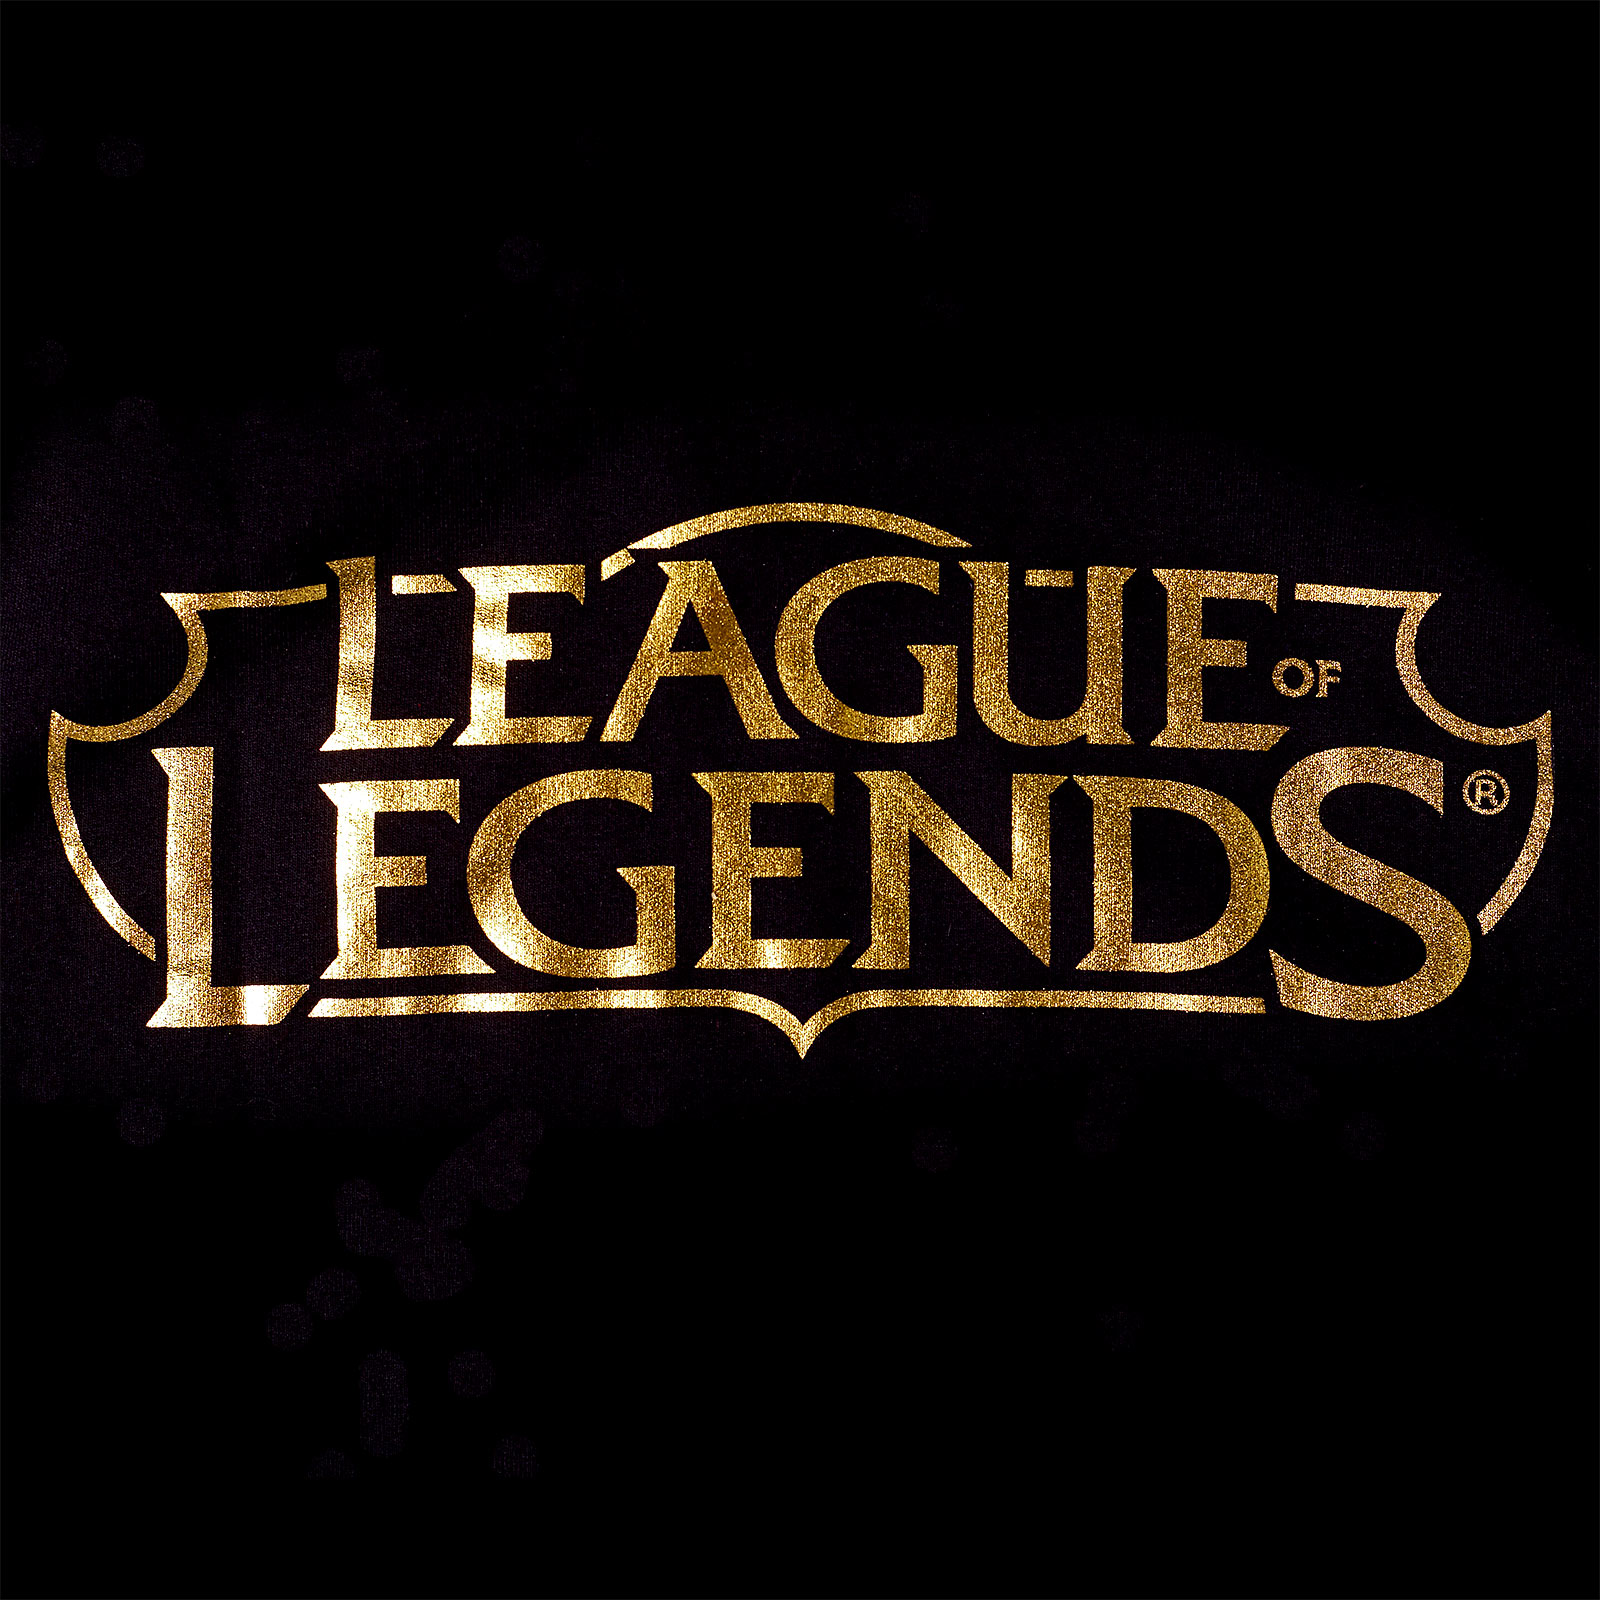 League of Legends - Logo Hoodie black